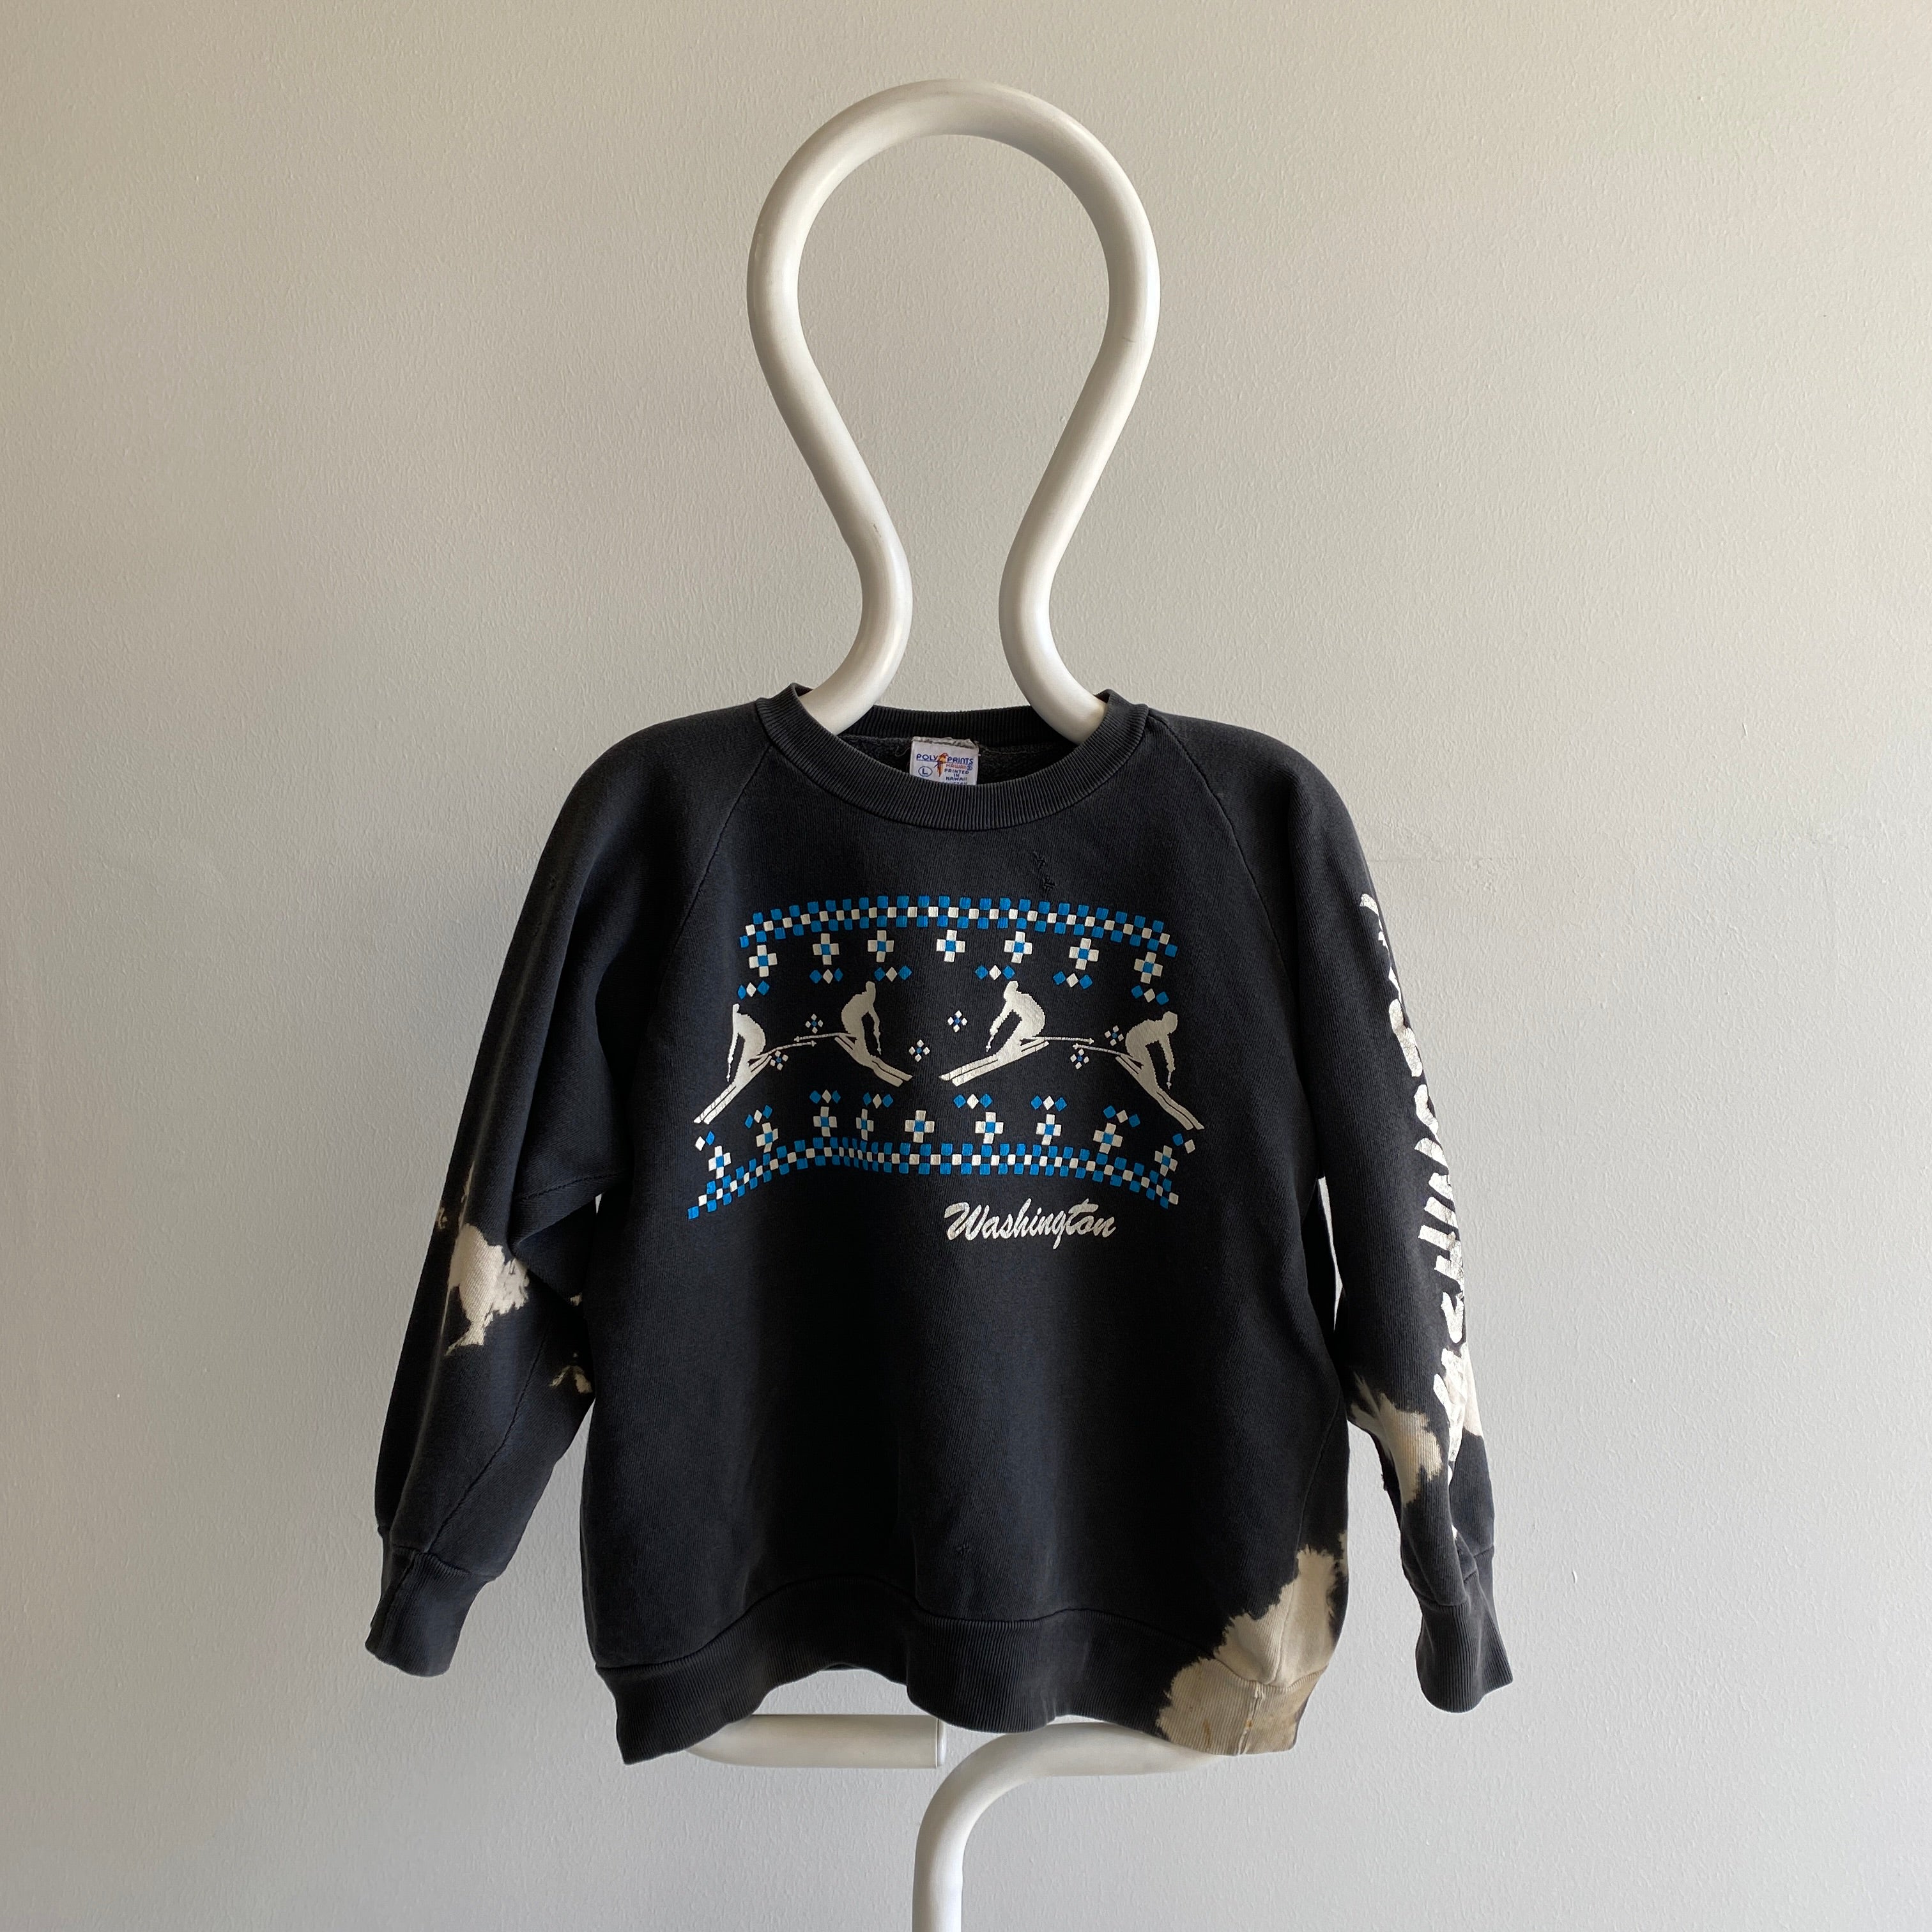 1980/90s Bleach Stained Washington Tourist 100% Cotton Sweatshirt